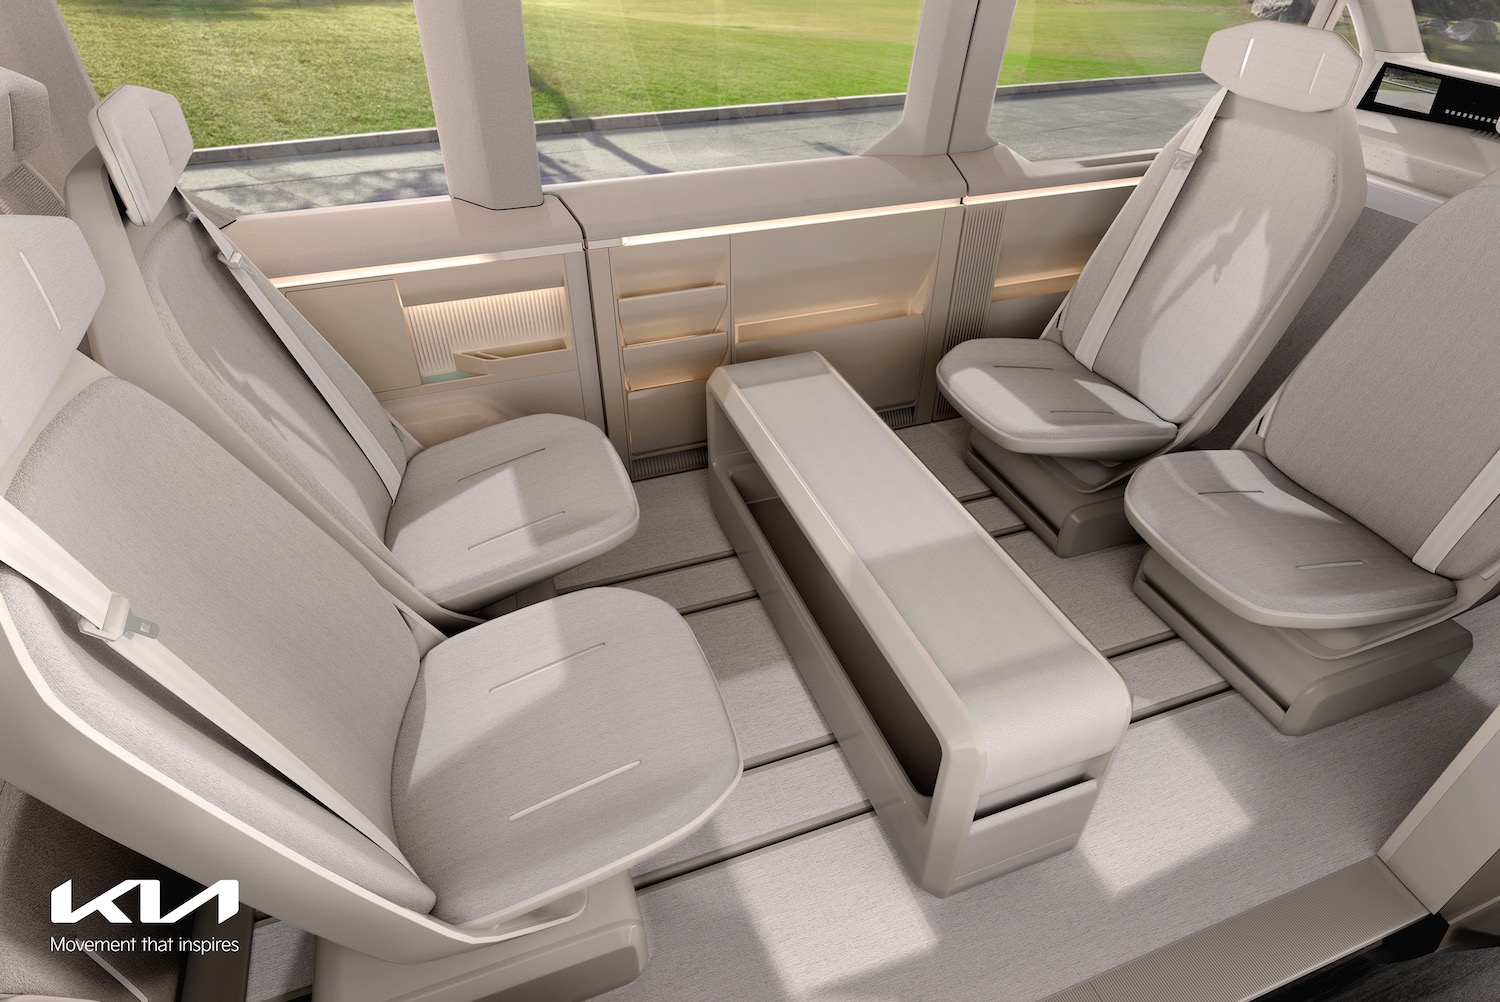 Interior of a Kia Concept PV5 with inward-facing seats.